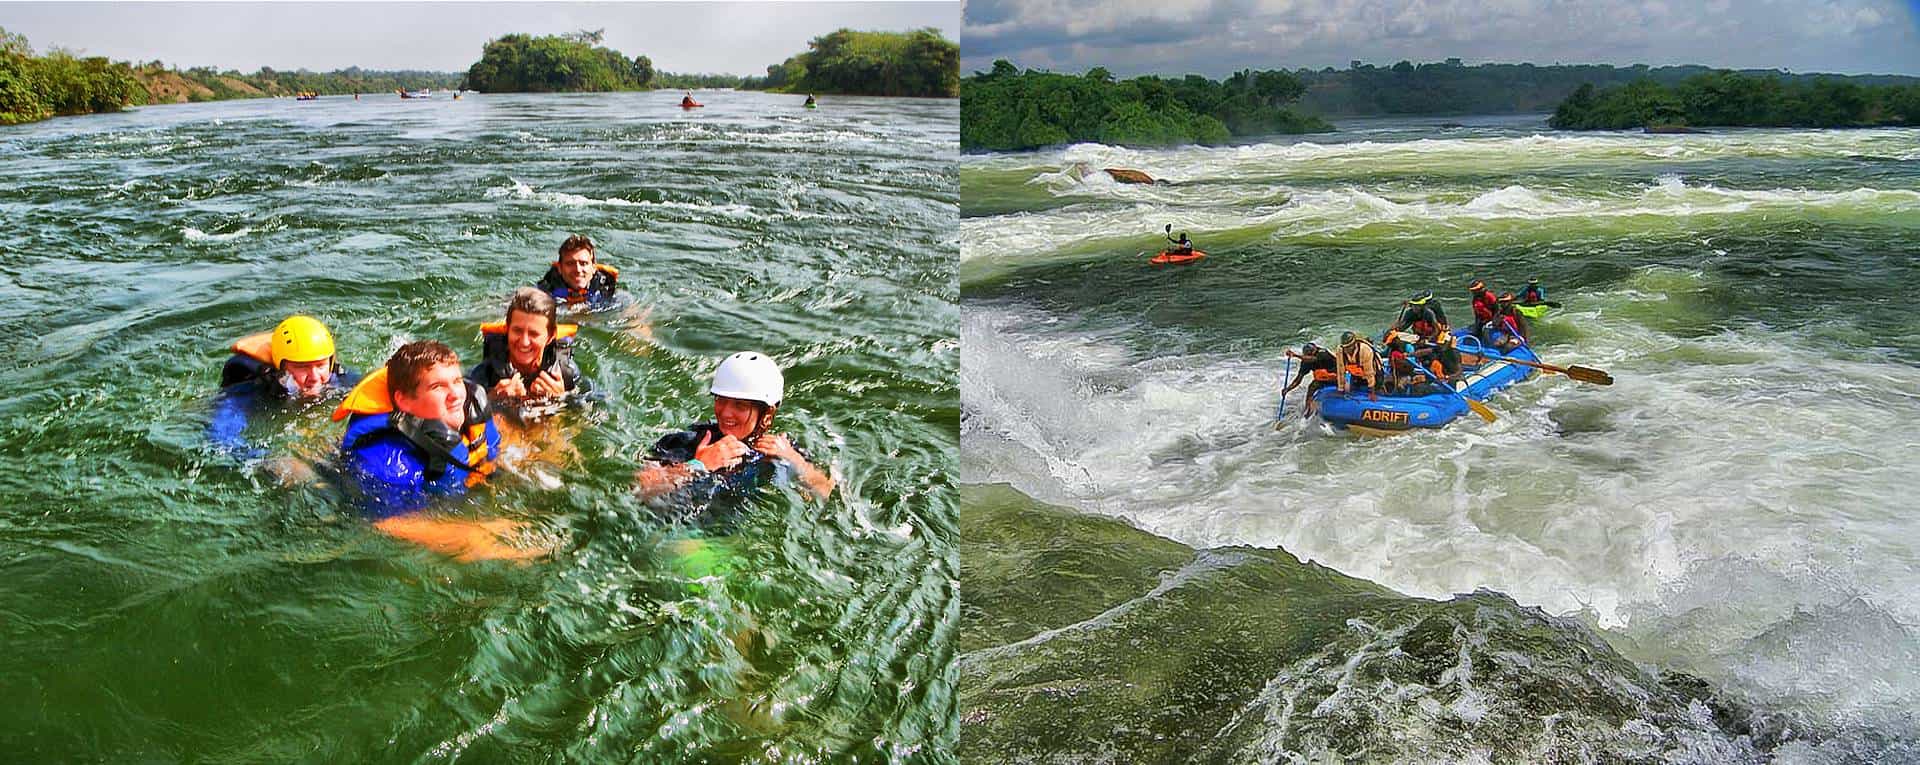 Jinja - Nile River Tour Activities & Attractions